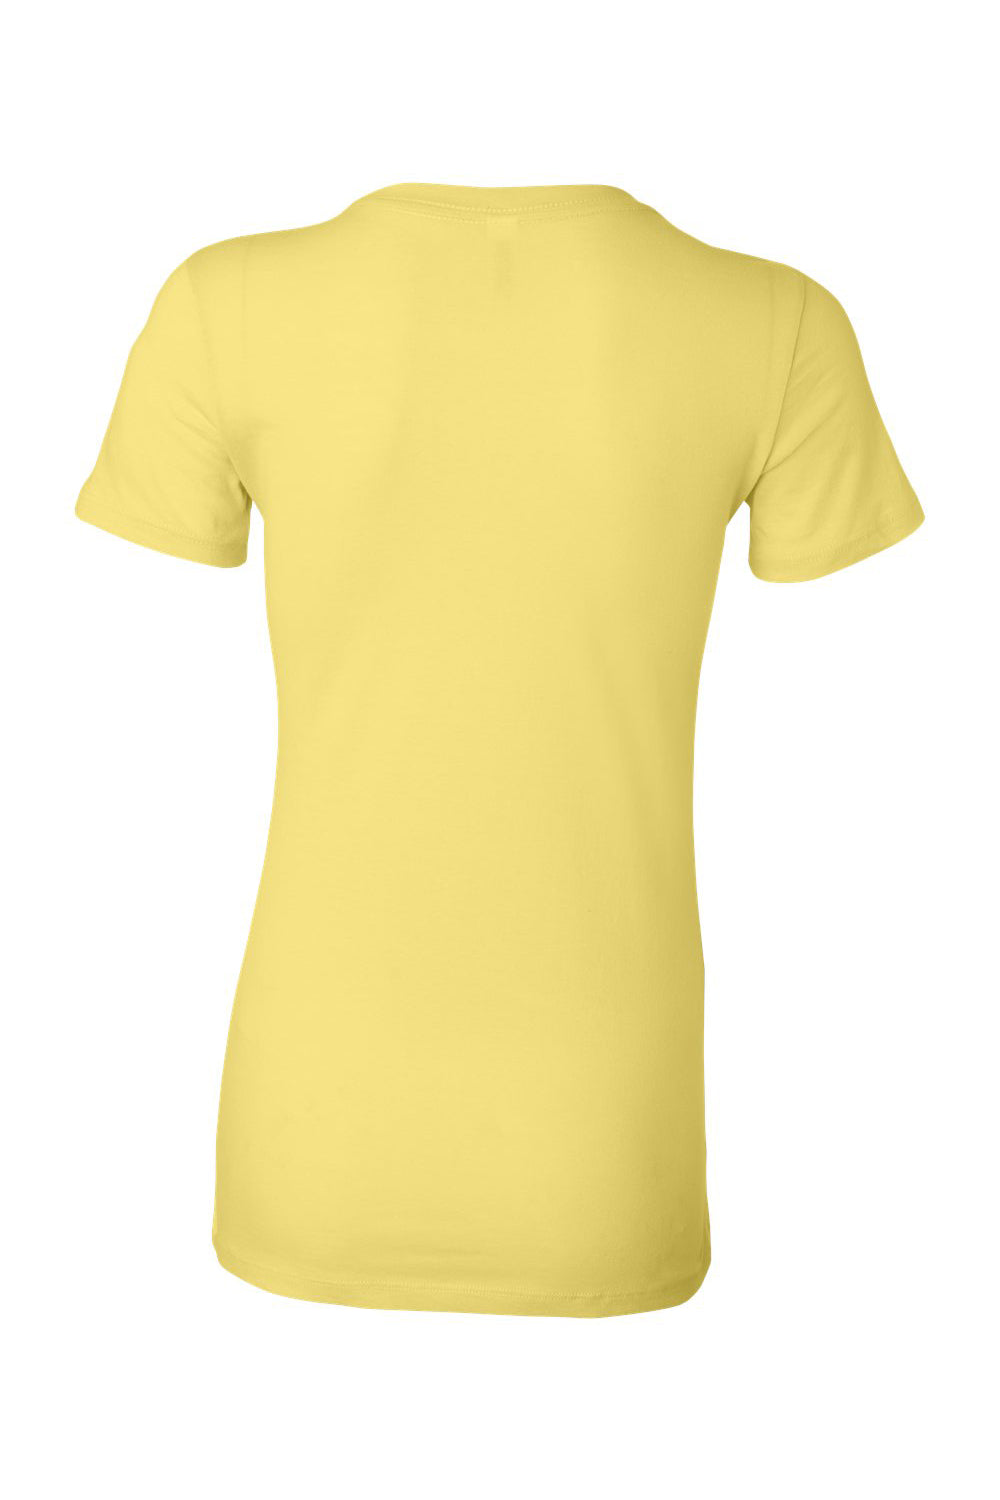 Bella + Canvas BC6004/6004 Womens The Favorite Short Sleeve Crewneck T-Shirt Yellow Flat Back